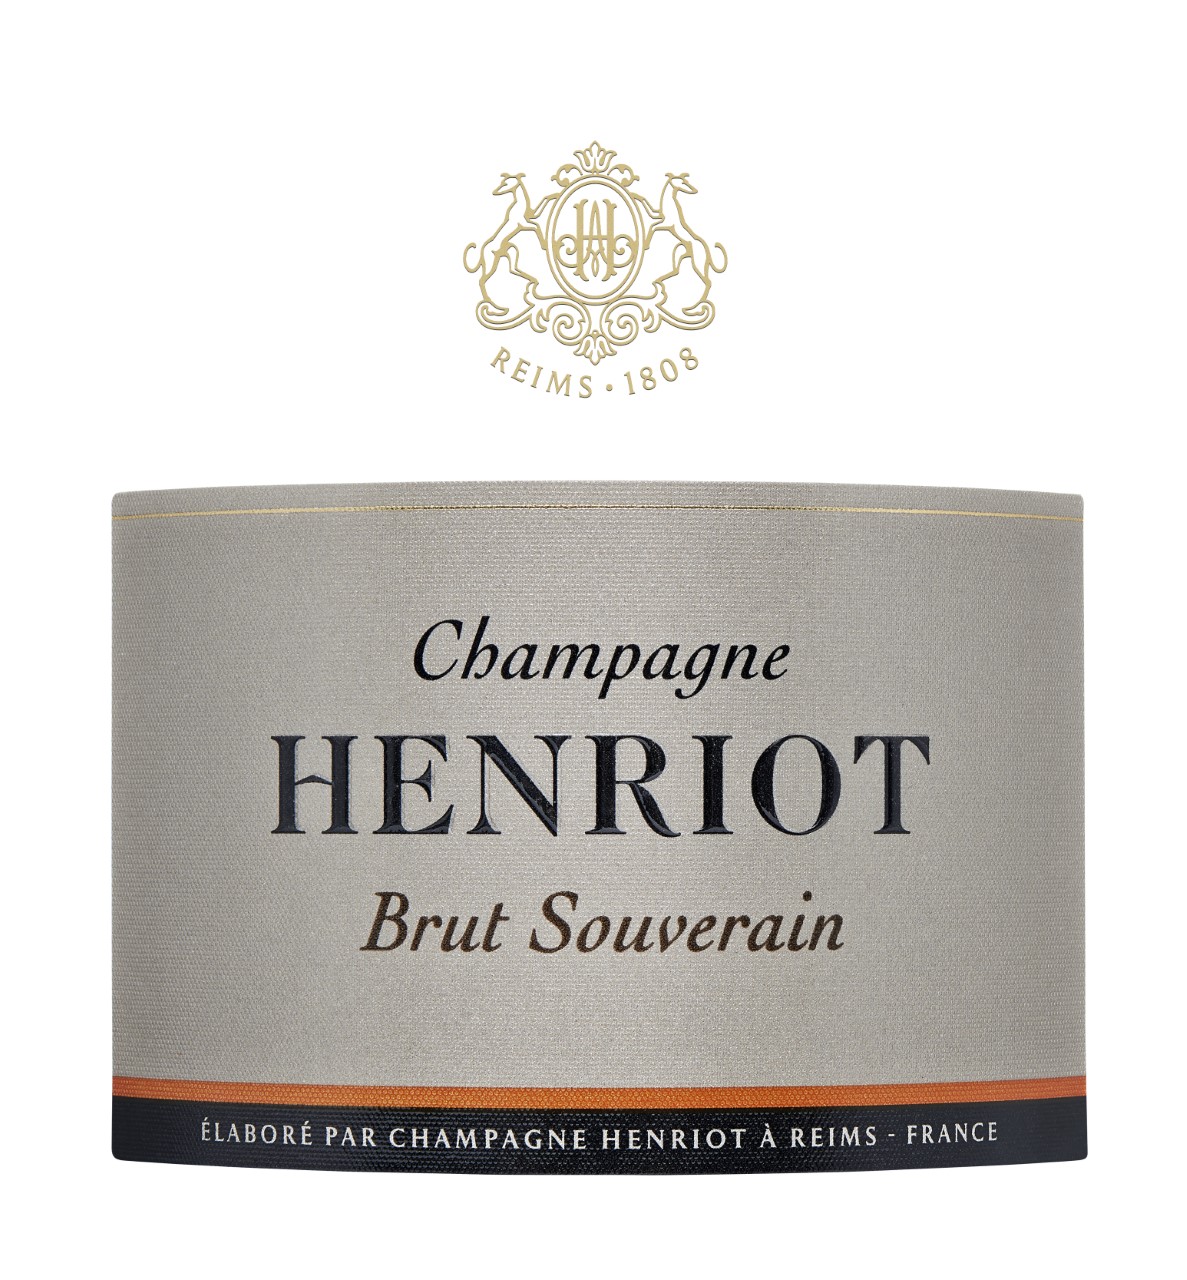 NV Henriot Souverain Brut Champagne image